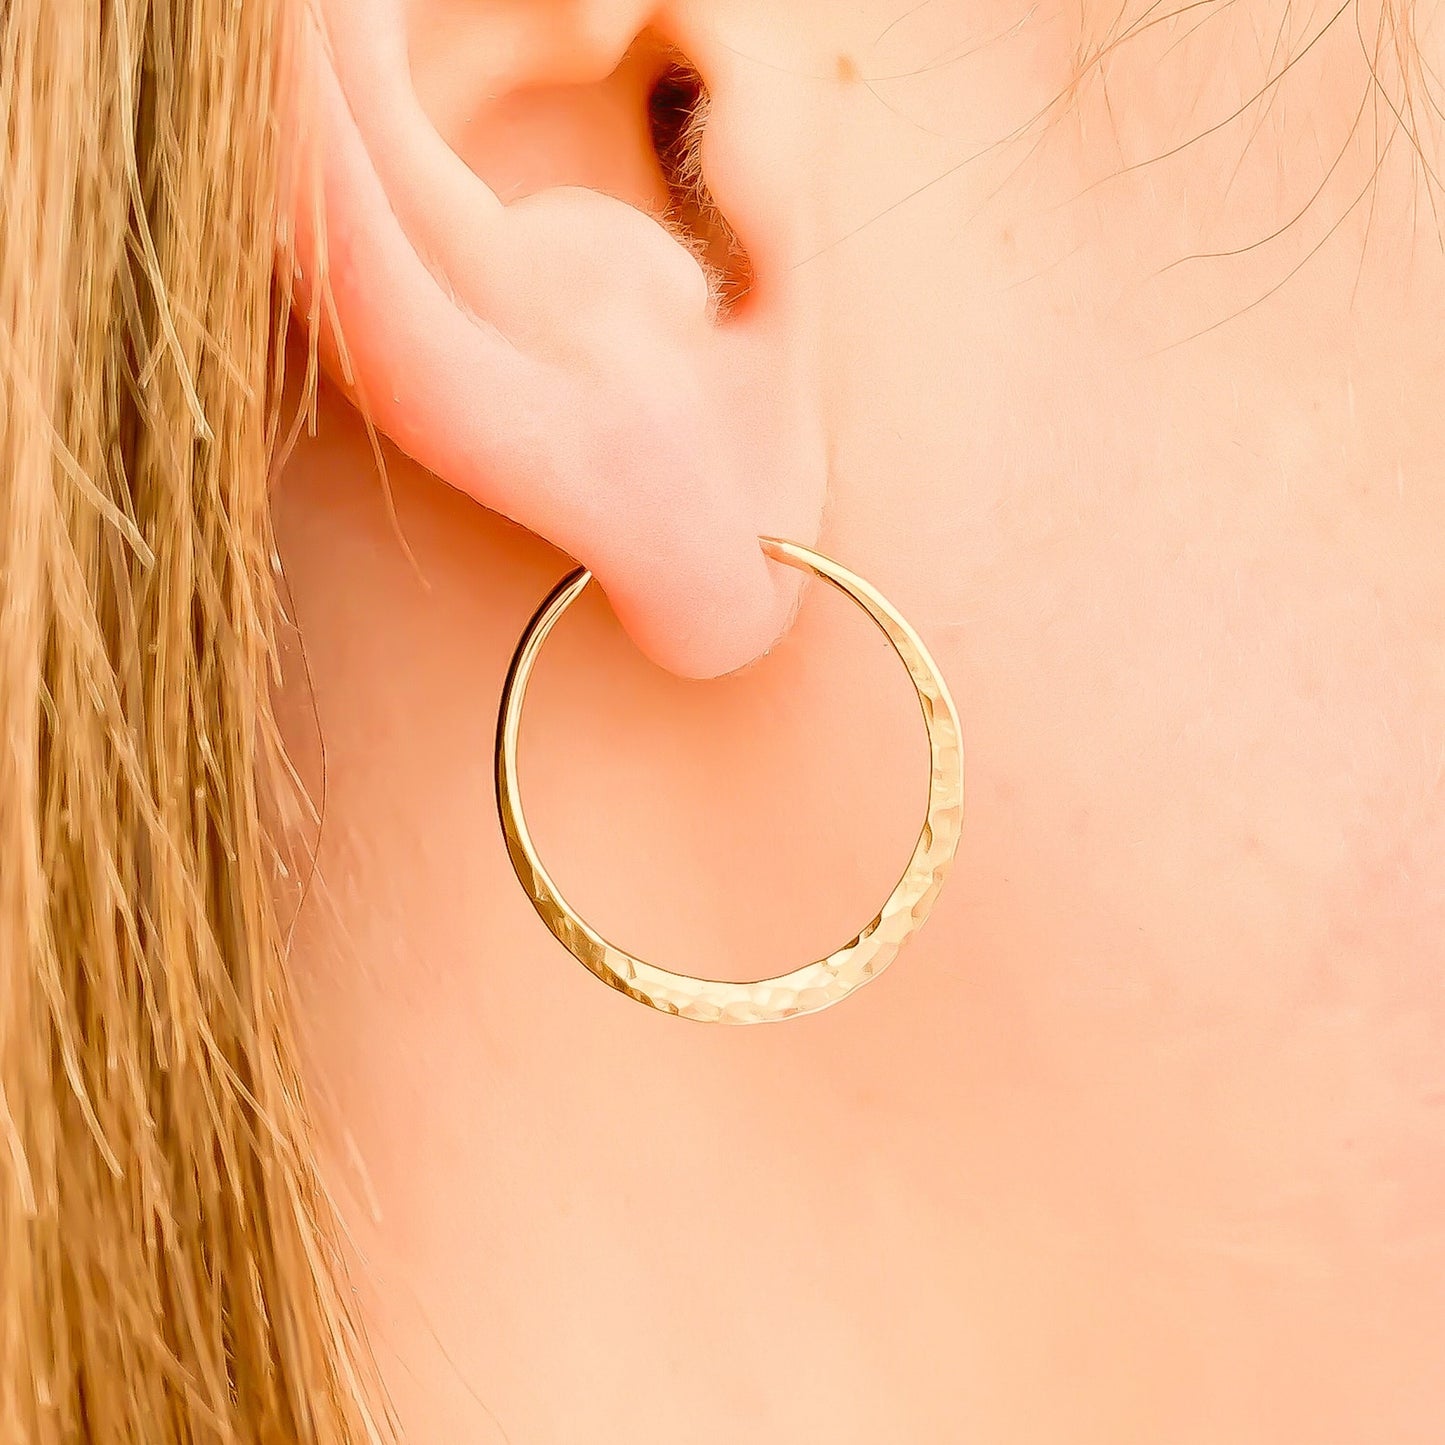 25mm Hammered Hoop Earrings, 14K Gold Filled